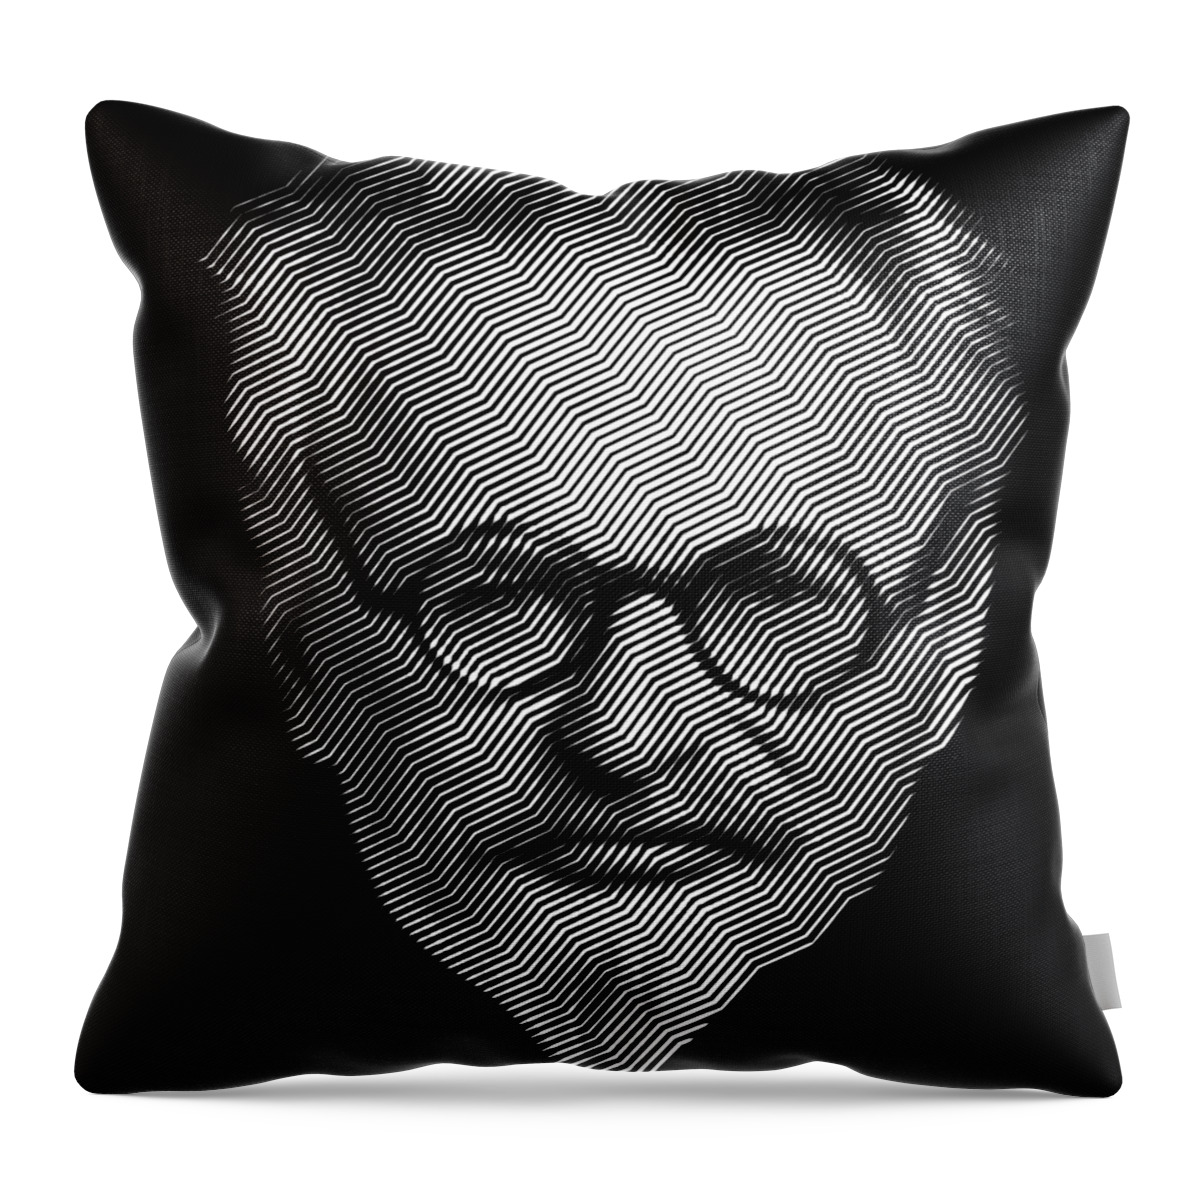 Trotsky Throw Pillow featuring the digital art Leon Trotsky by Cu Biz